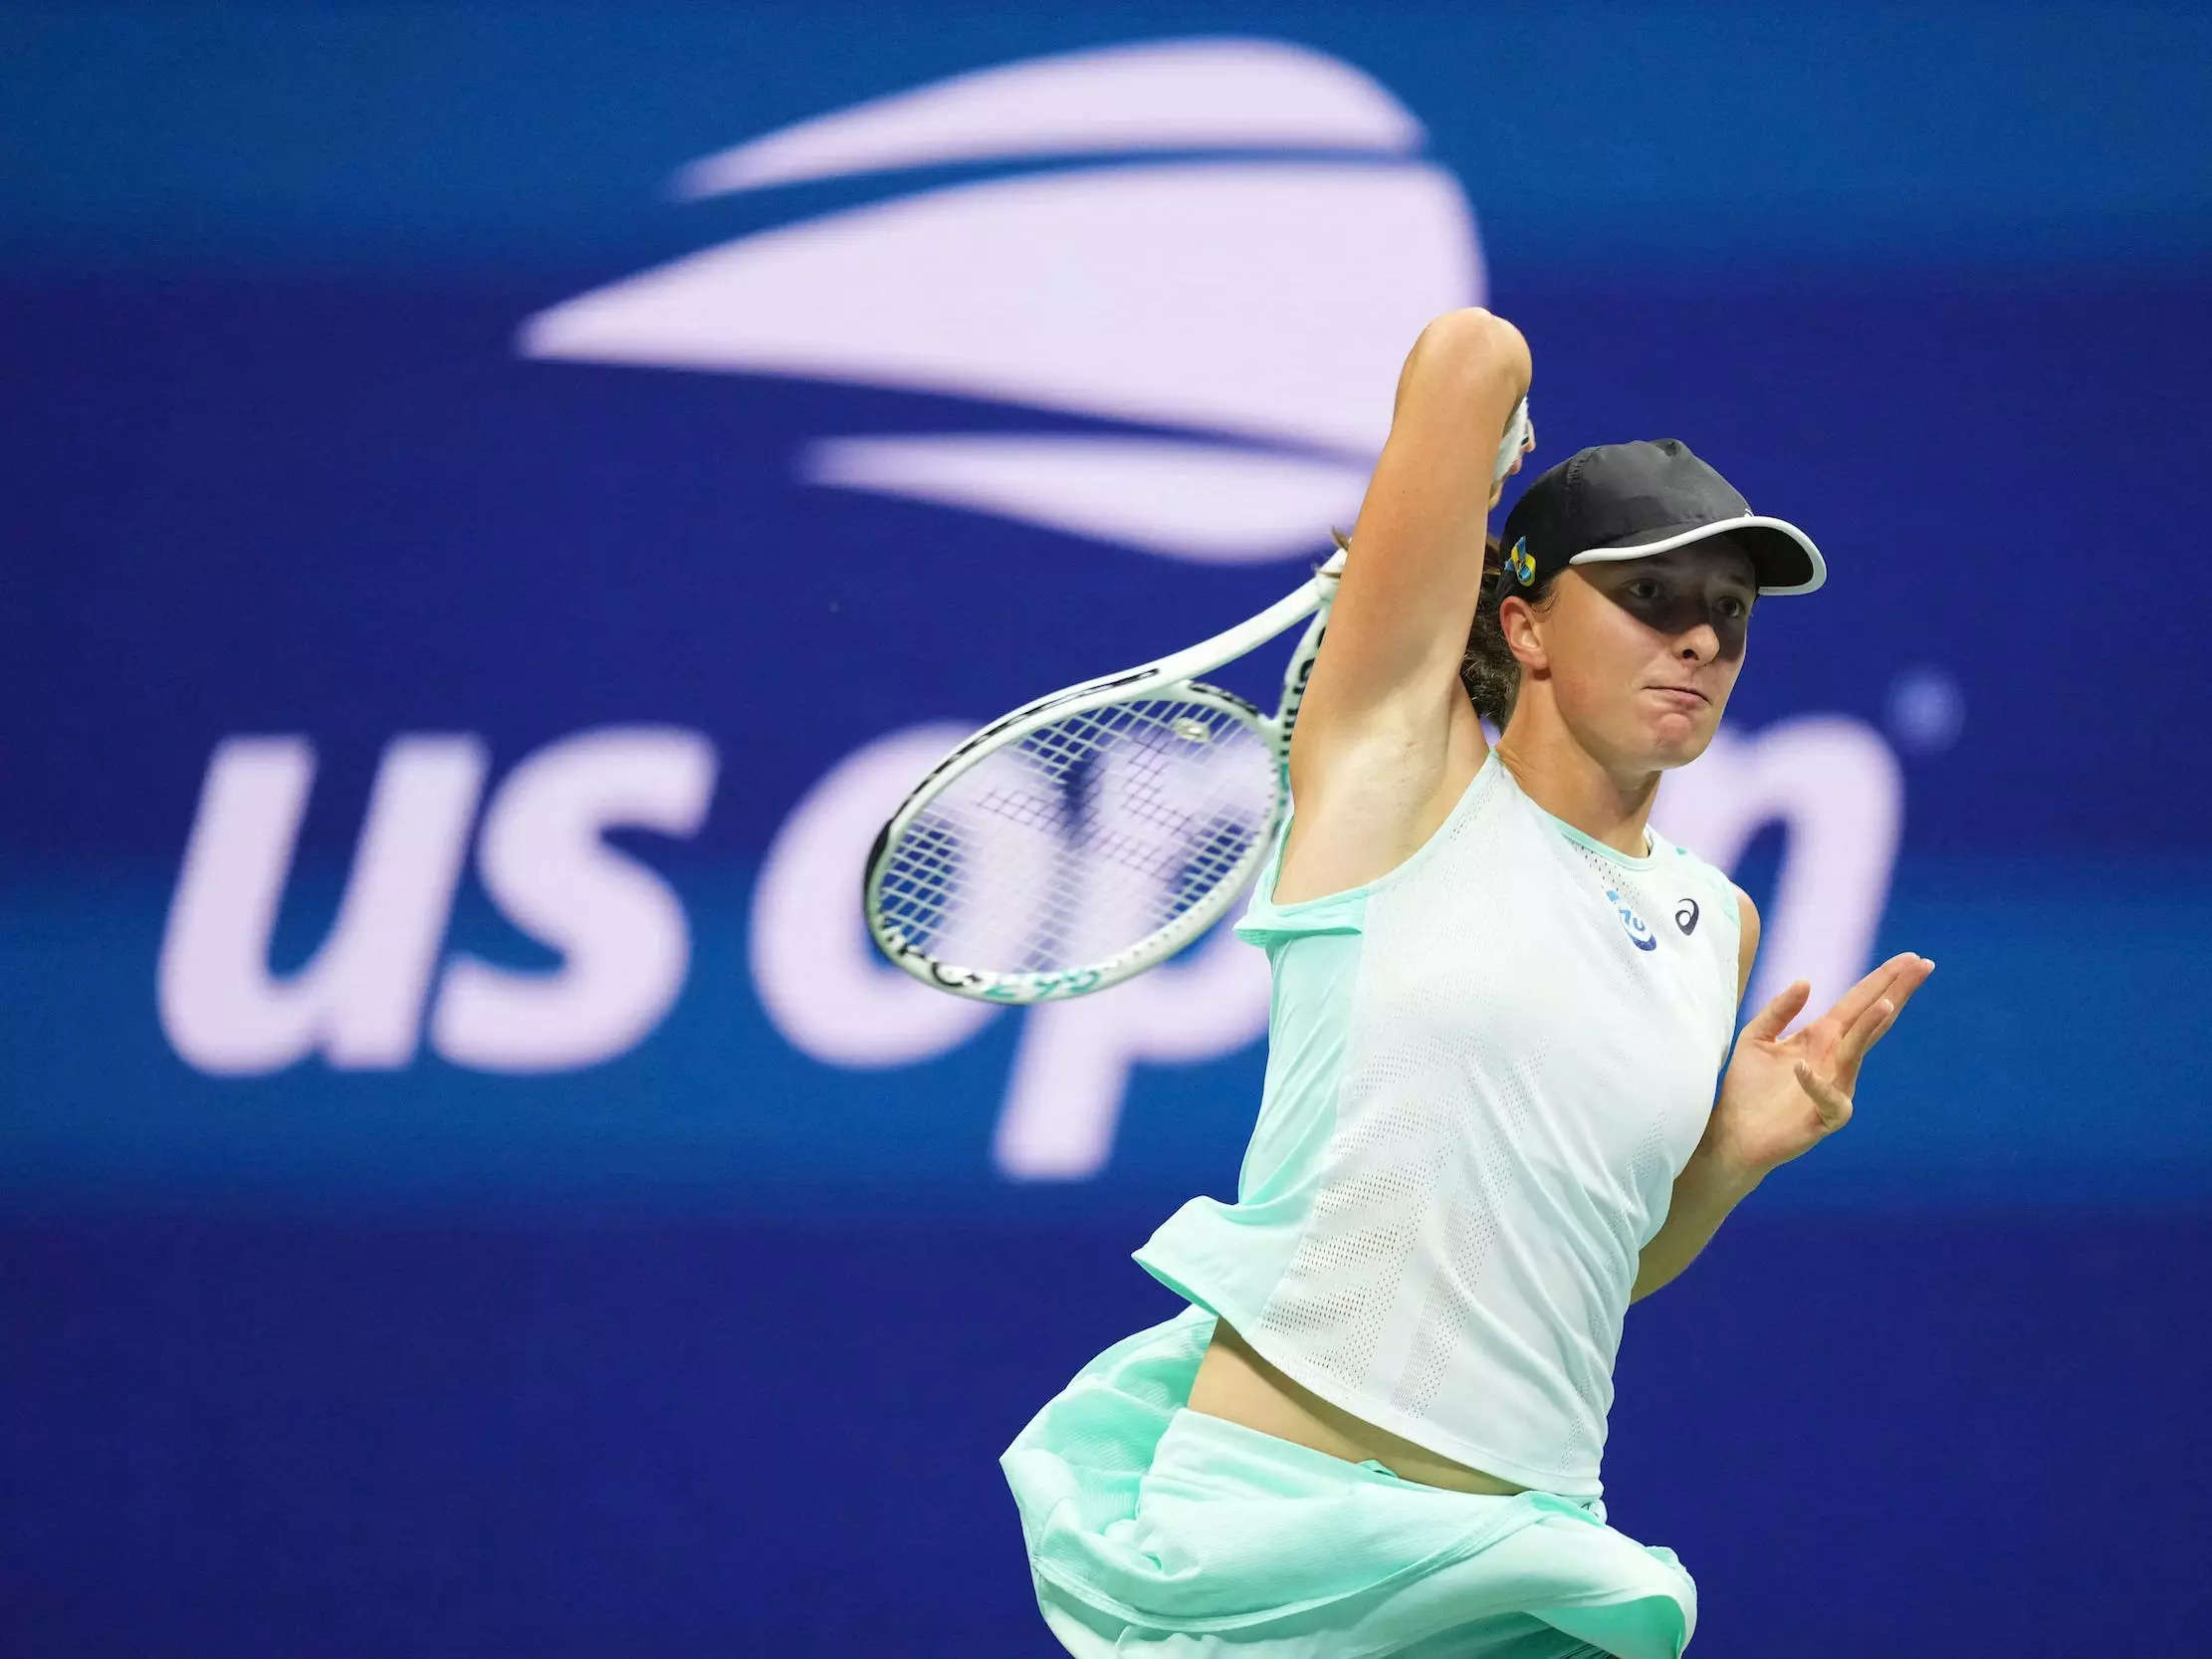 Iga Swiatek hits a shot during her US Open semifinal match against Aryna Sabalenka.